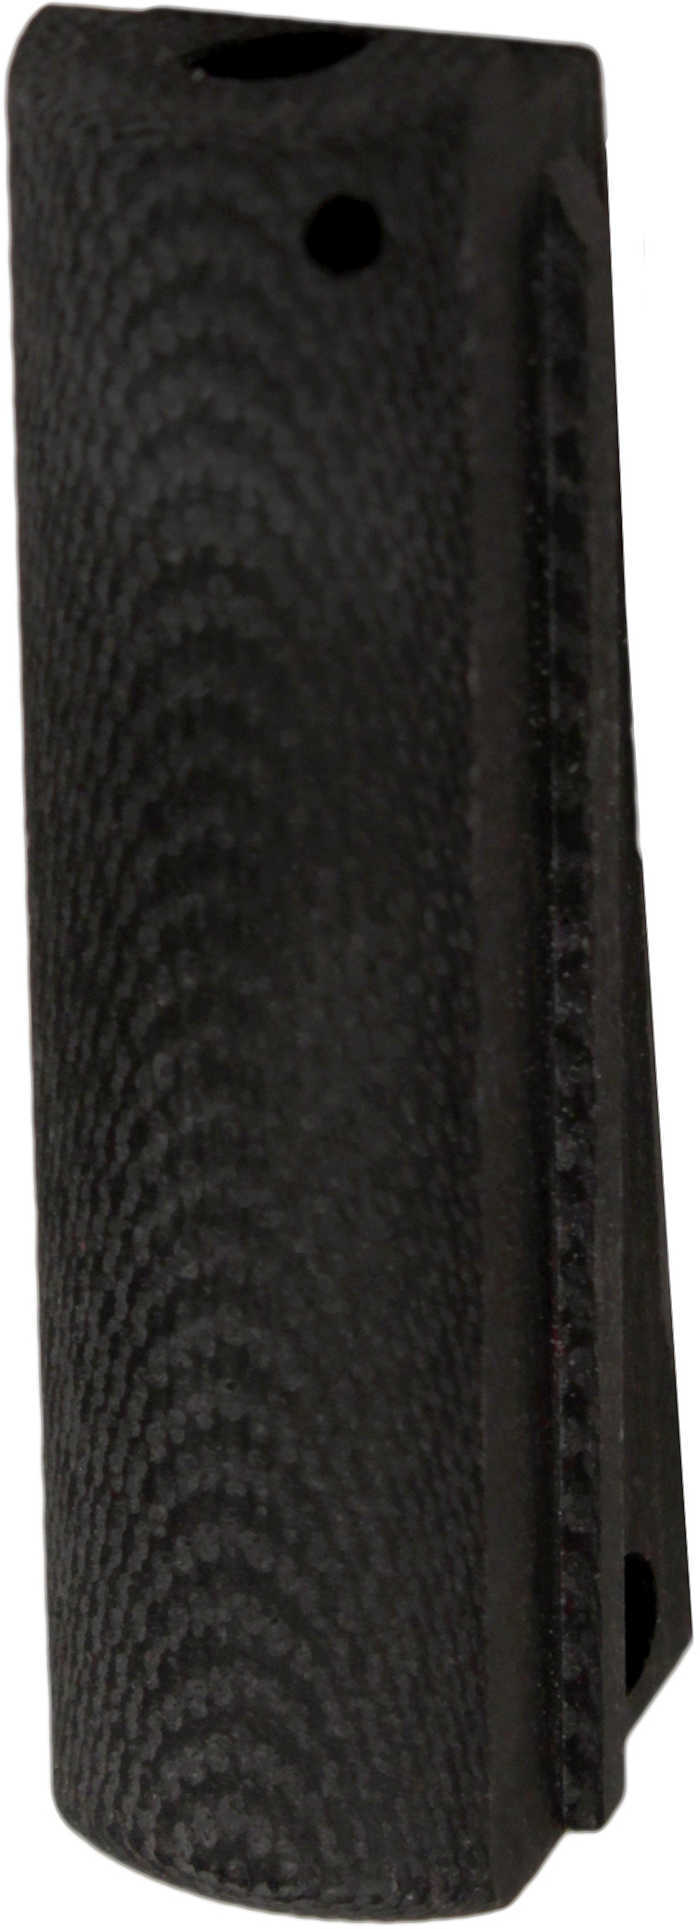 Hogue Colt, 1911 Government Mainspring Housing G-10 Glat Solid Black 01349